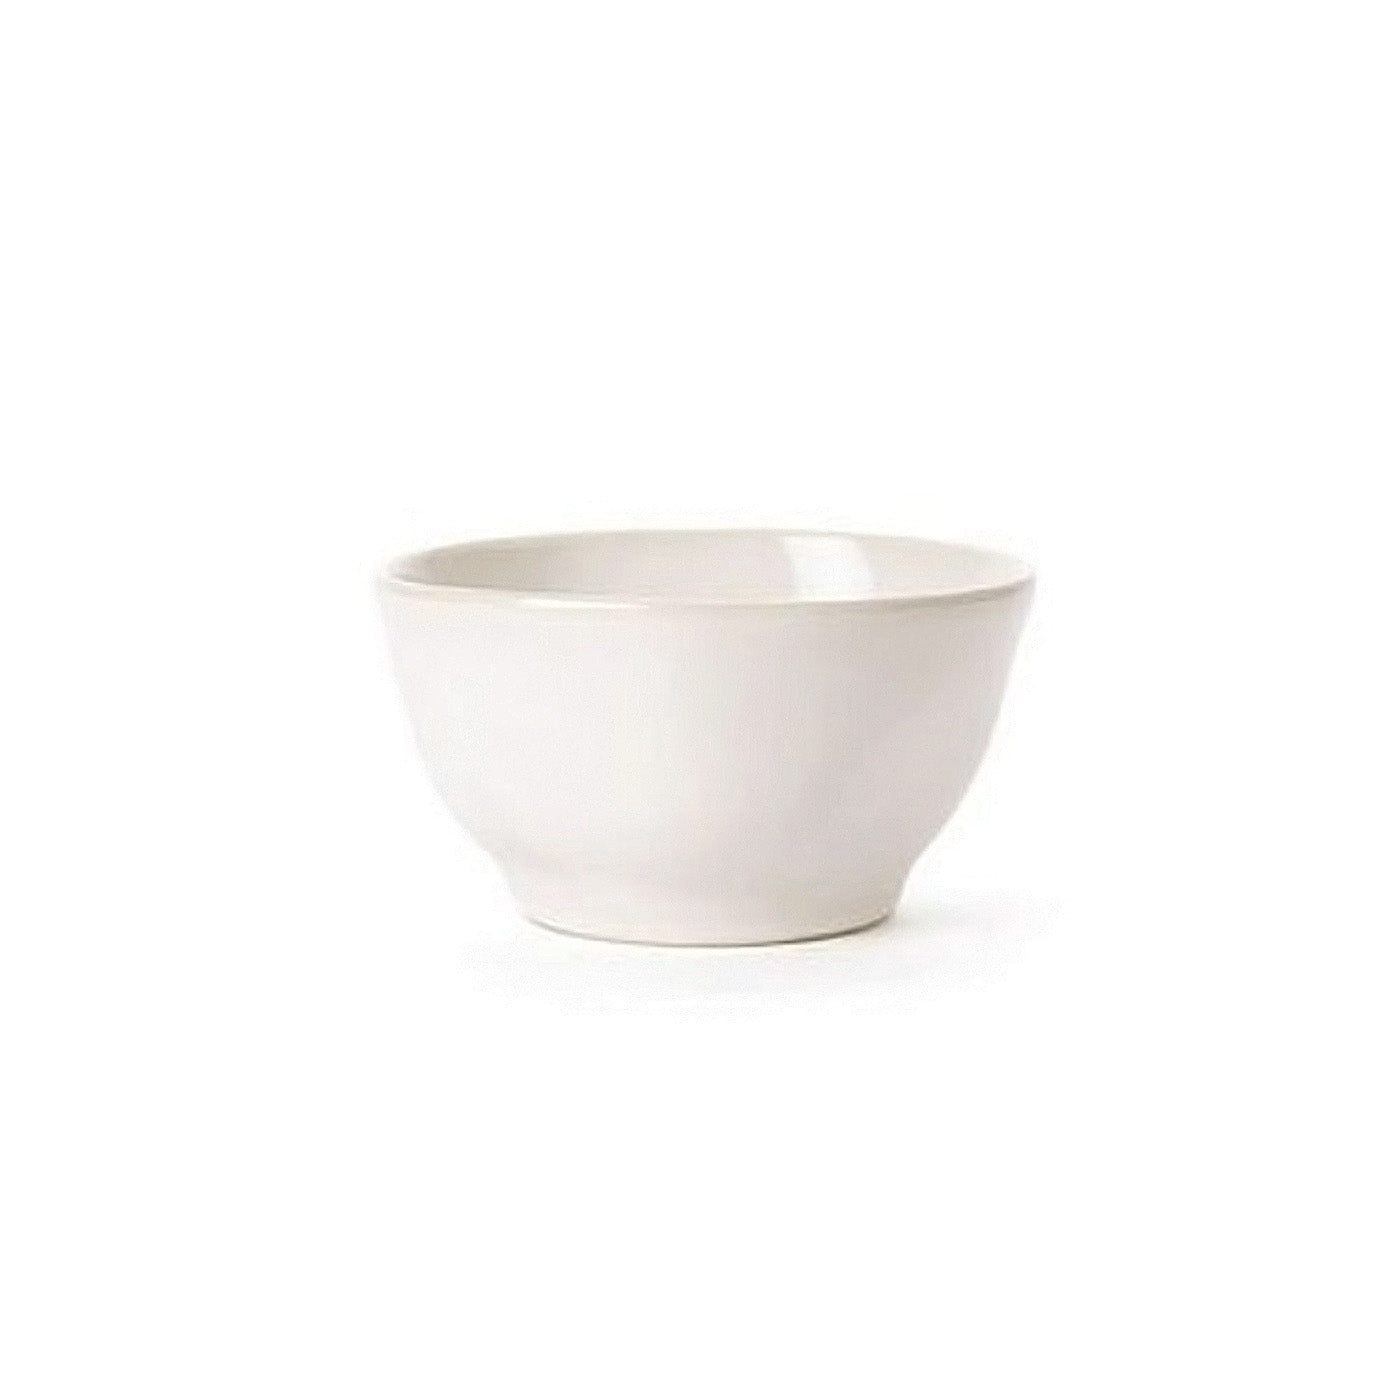 Vietri Forma Cloud Soup/Cereal Bowl, Artisan 4"D Stoneware Dining & Kitchen Dish